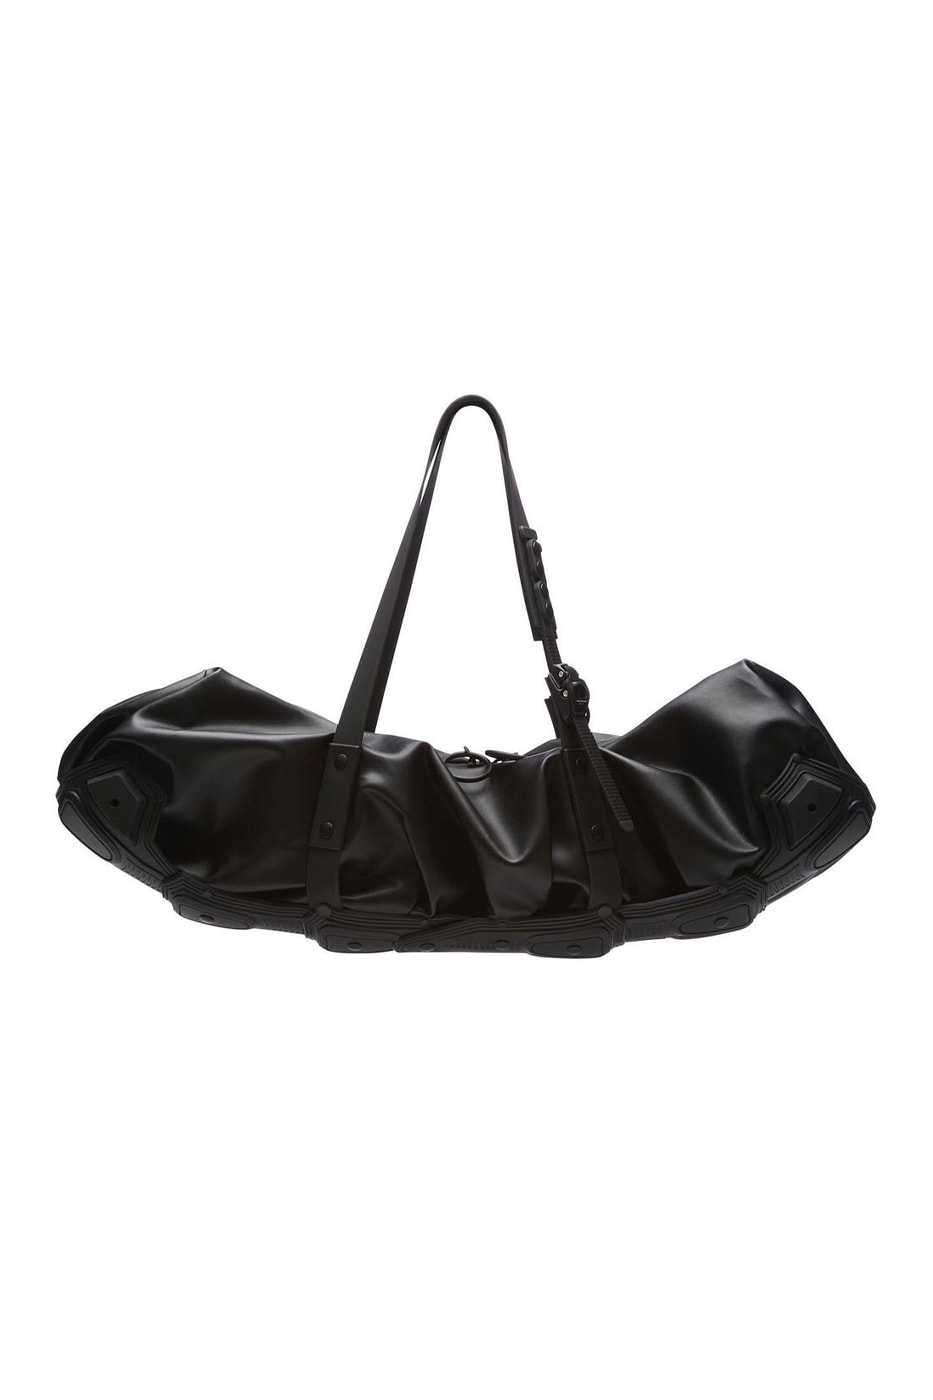 Innerraum baguette bag polyphonic object m09 176 single pieces matte black release info date price 